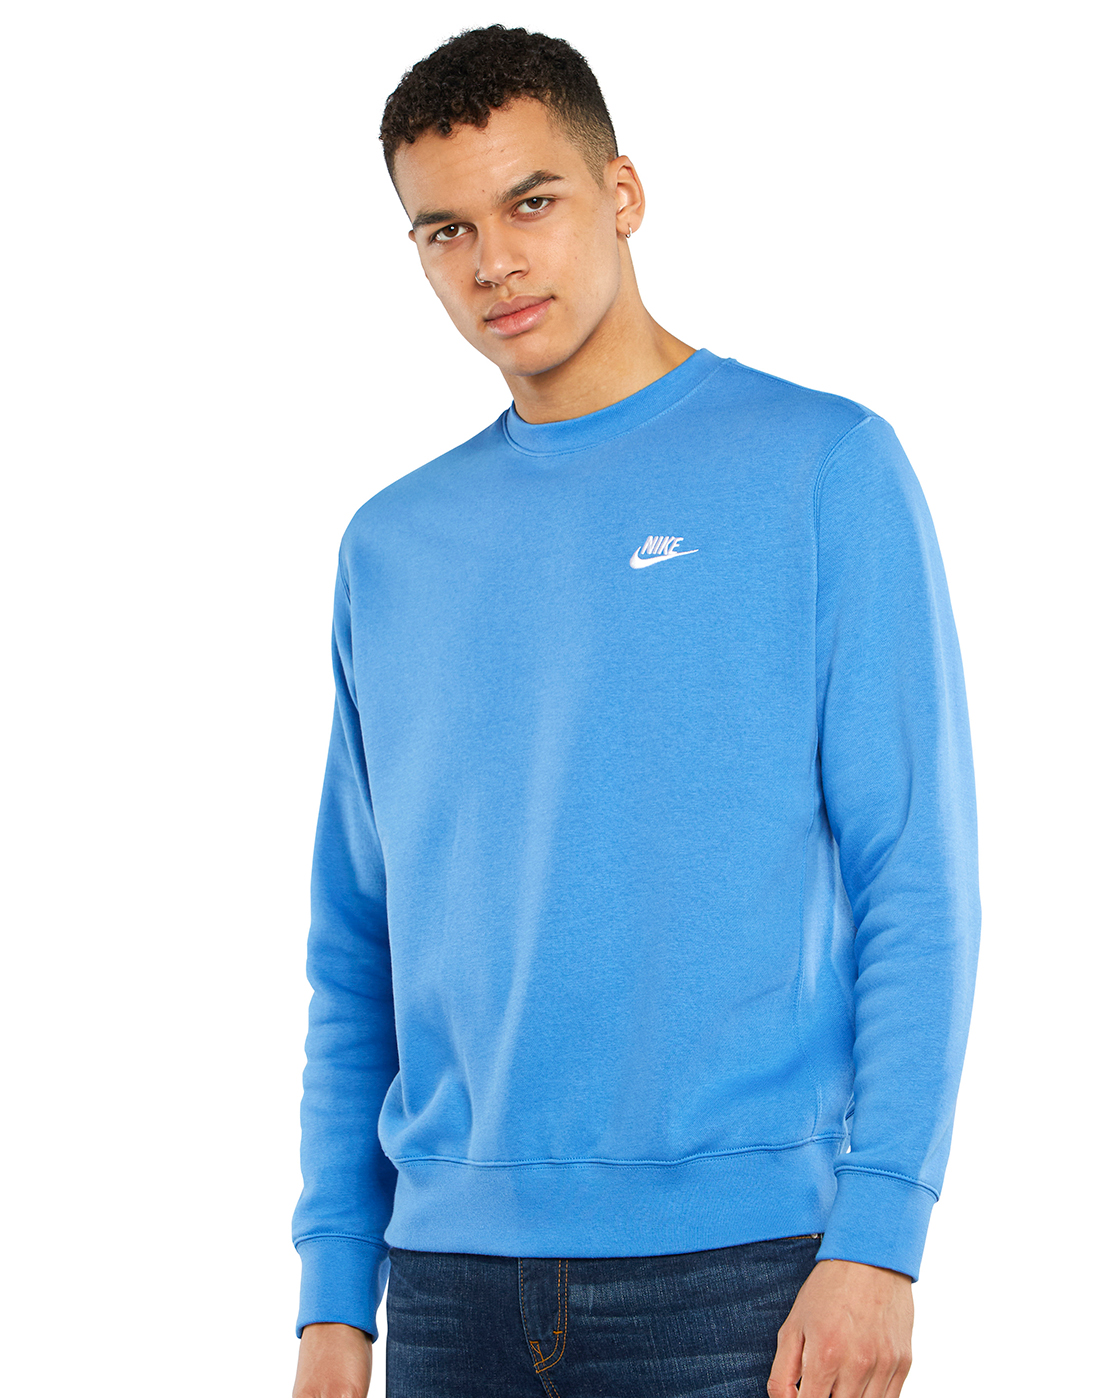 Nike Mens Club Crew Neck Sweatshirt - Blue | Life Style Sports UK